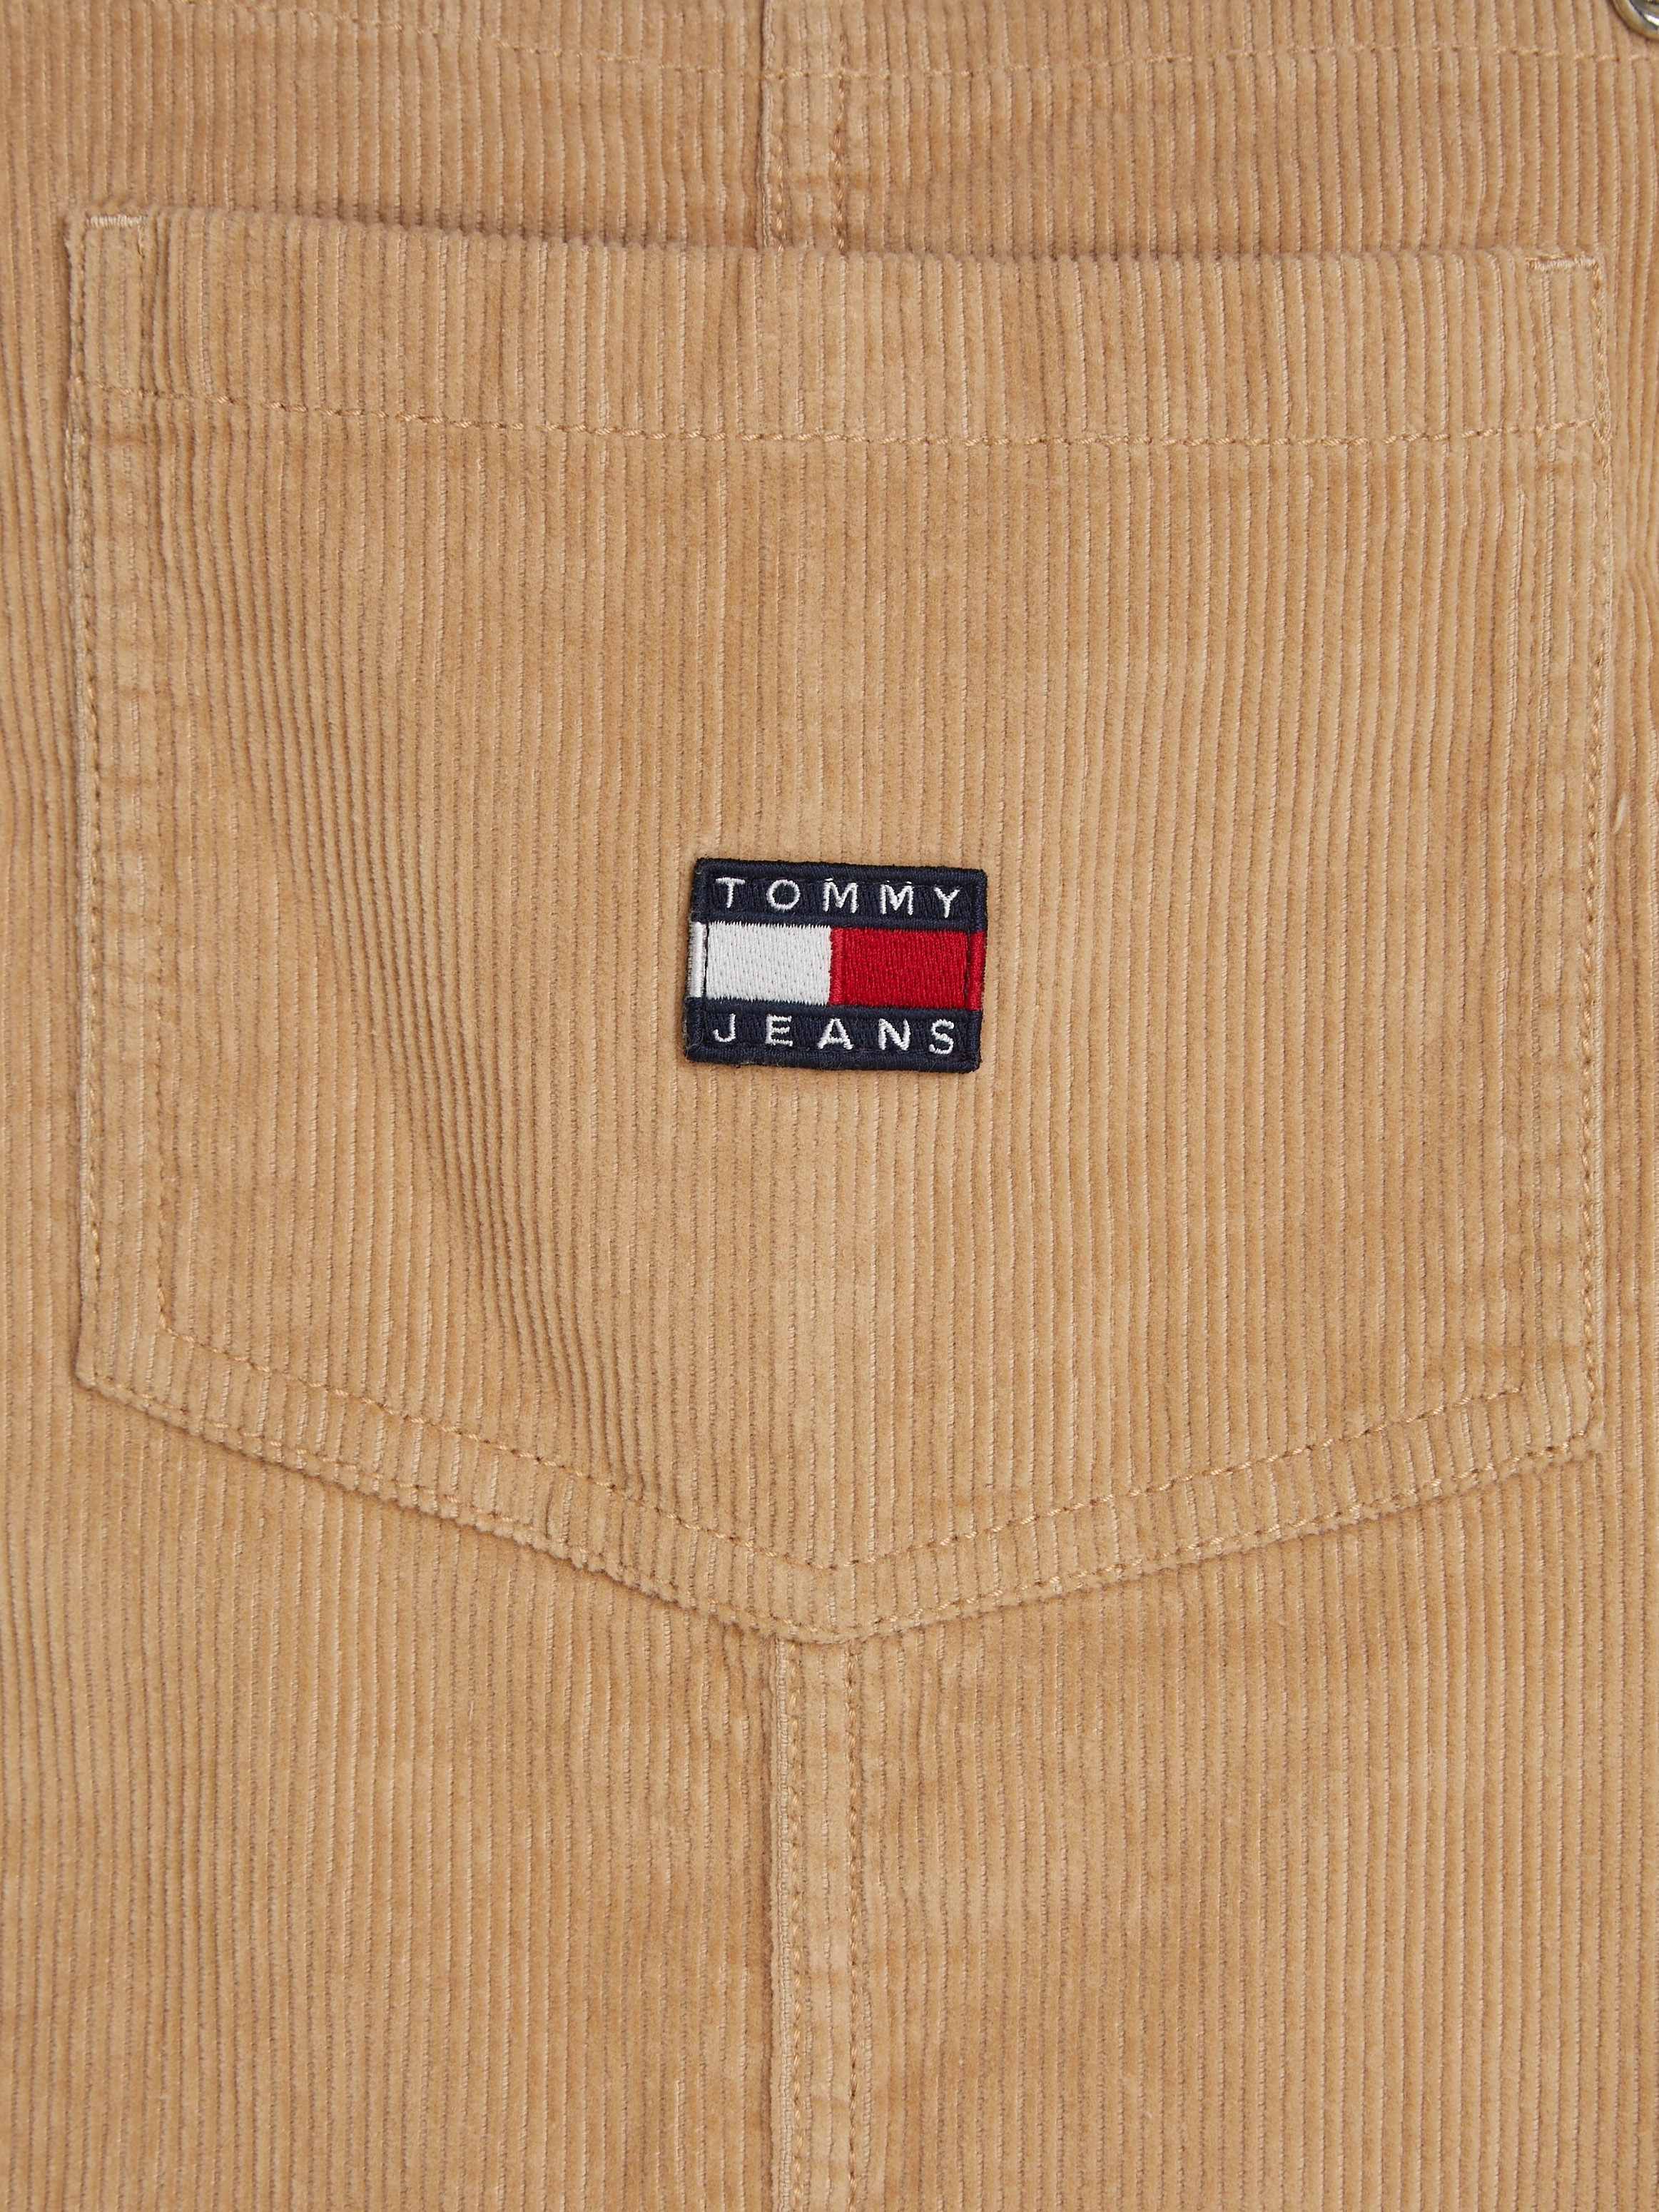 Tommy Jeans Shirtkleid »TJW CORD PINAFORE DRESS«, mit Tommy Jeans Markenlabel